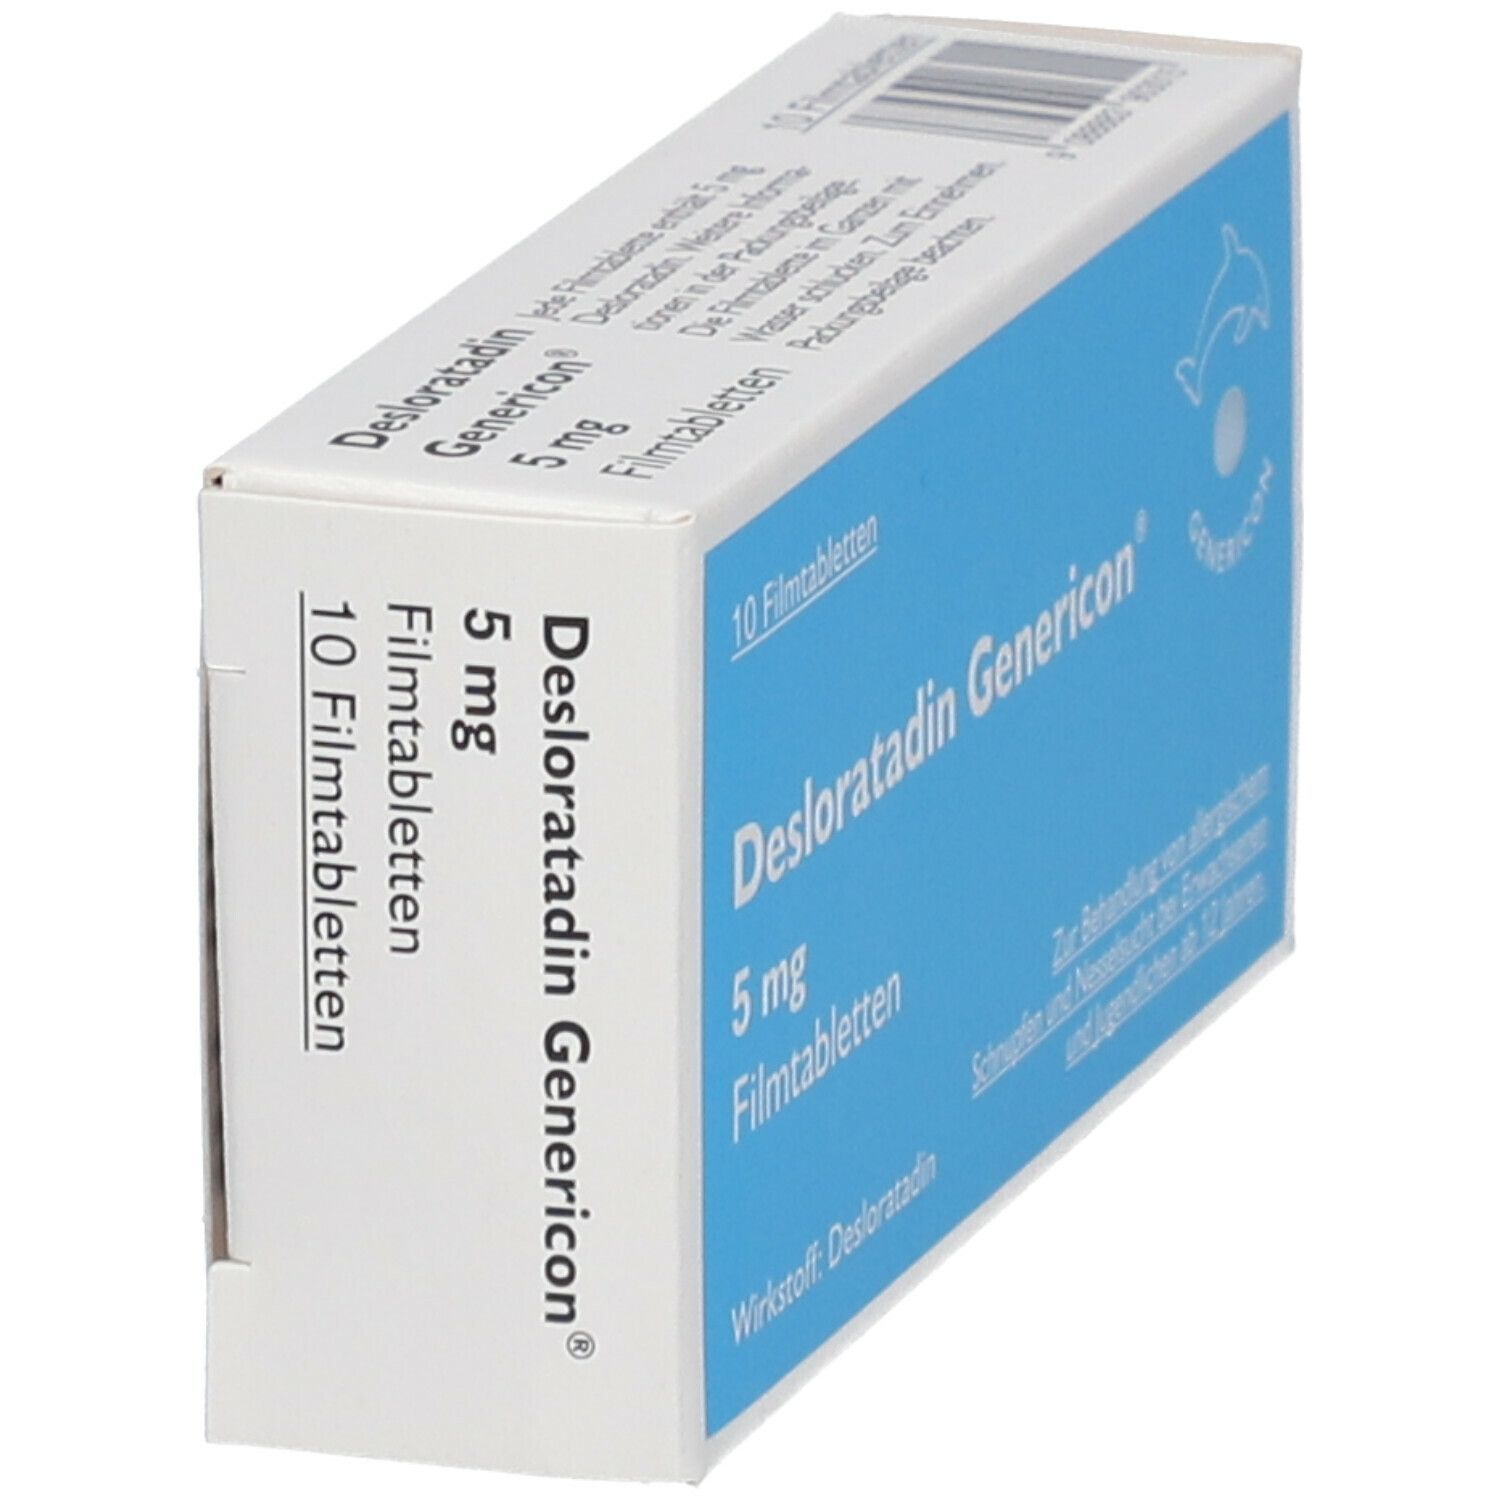 Desloratadin Genericon 5 mg